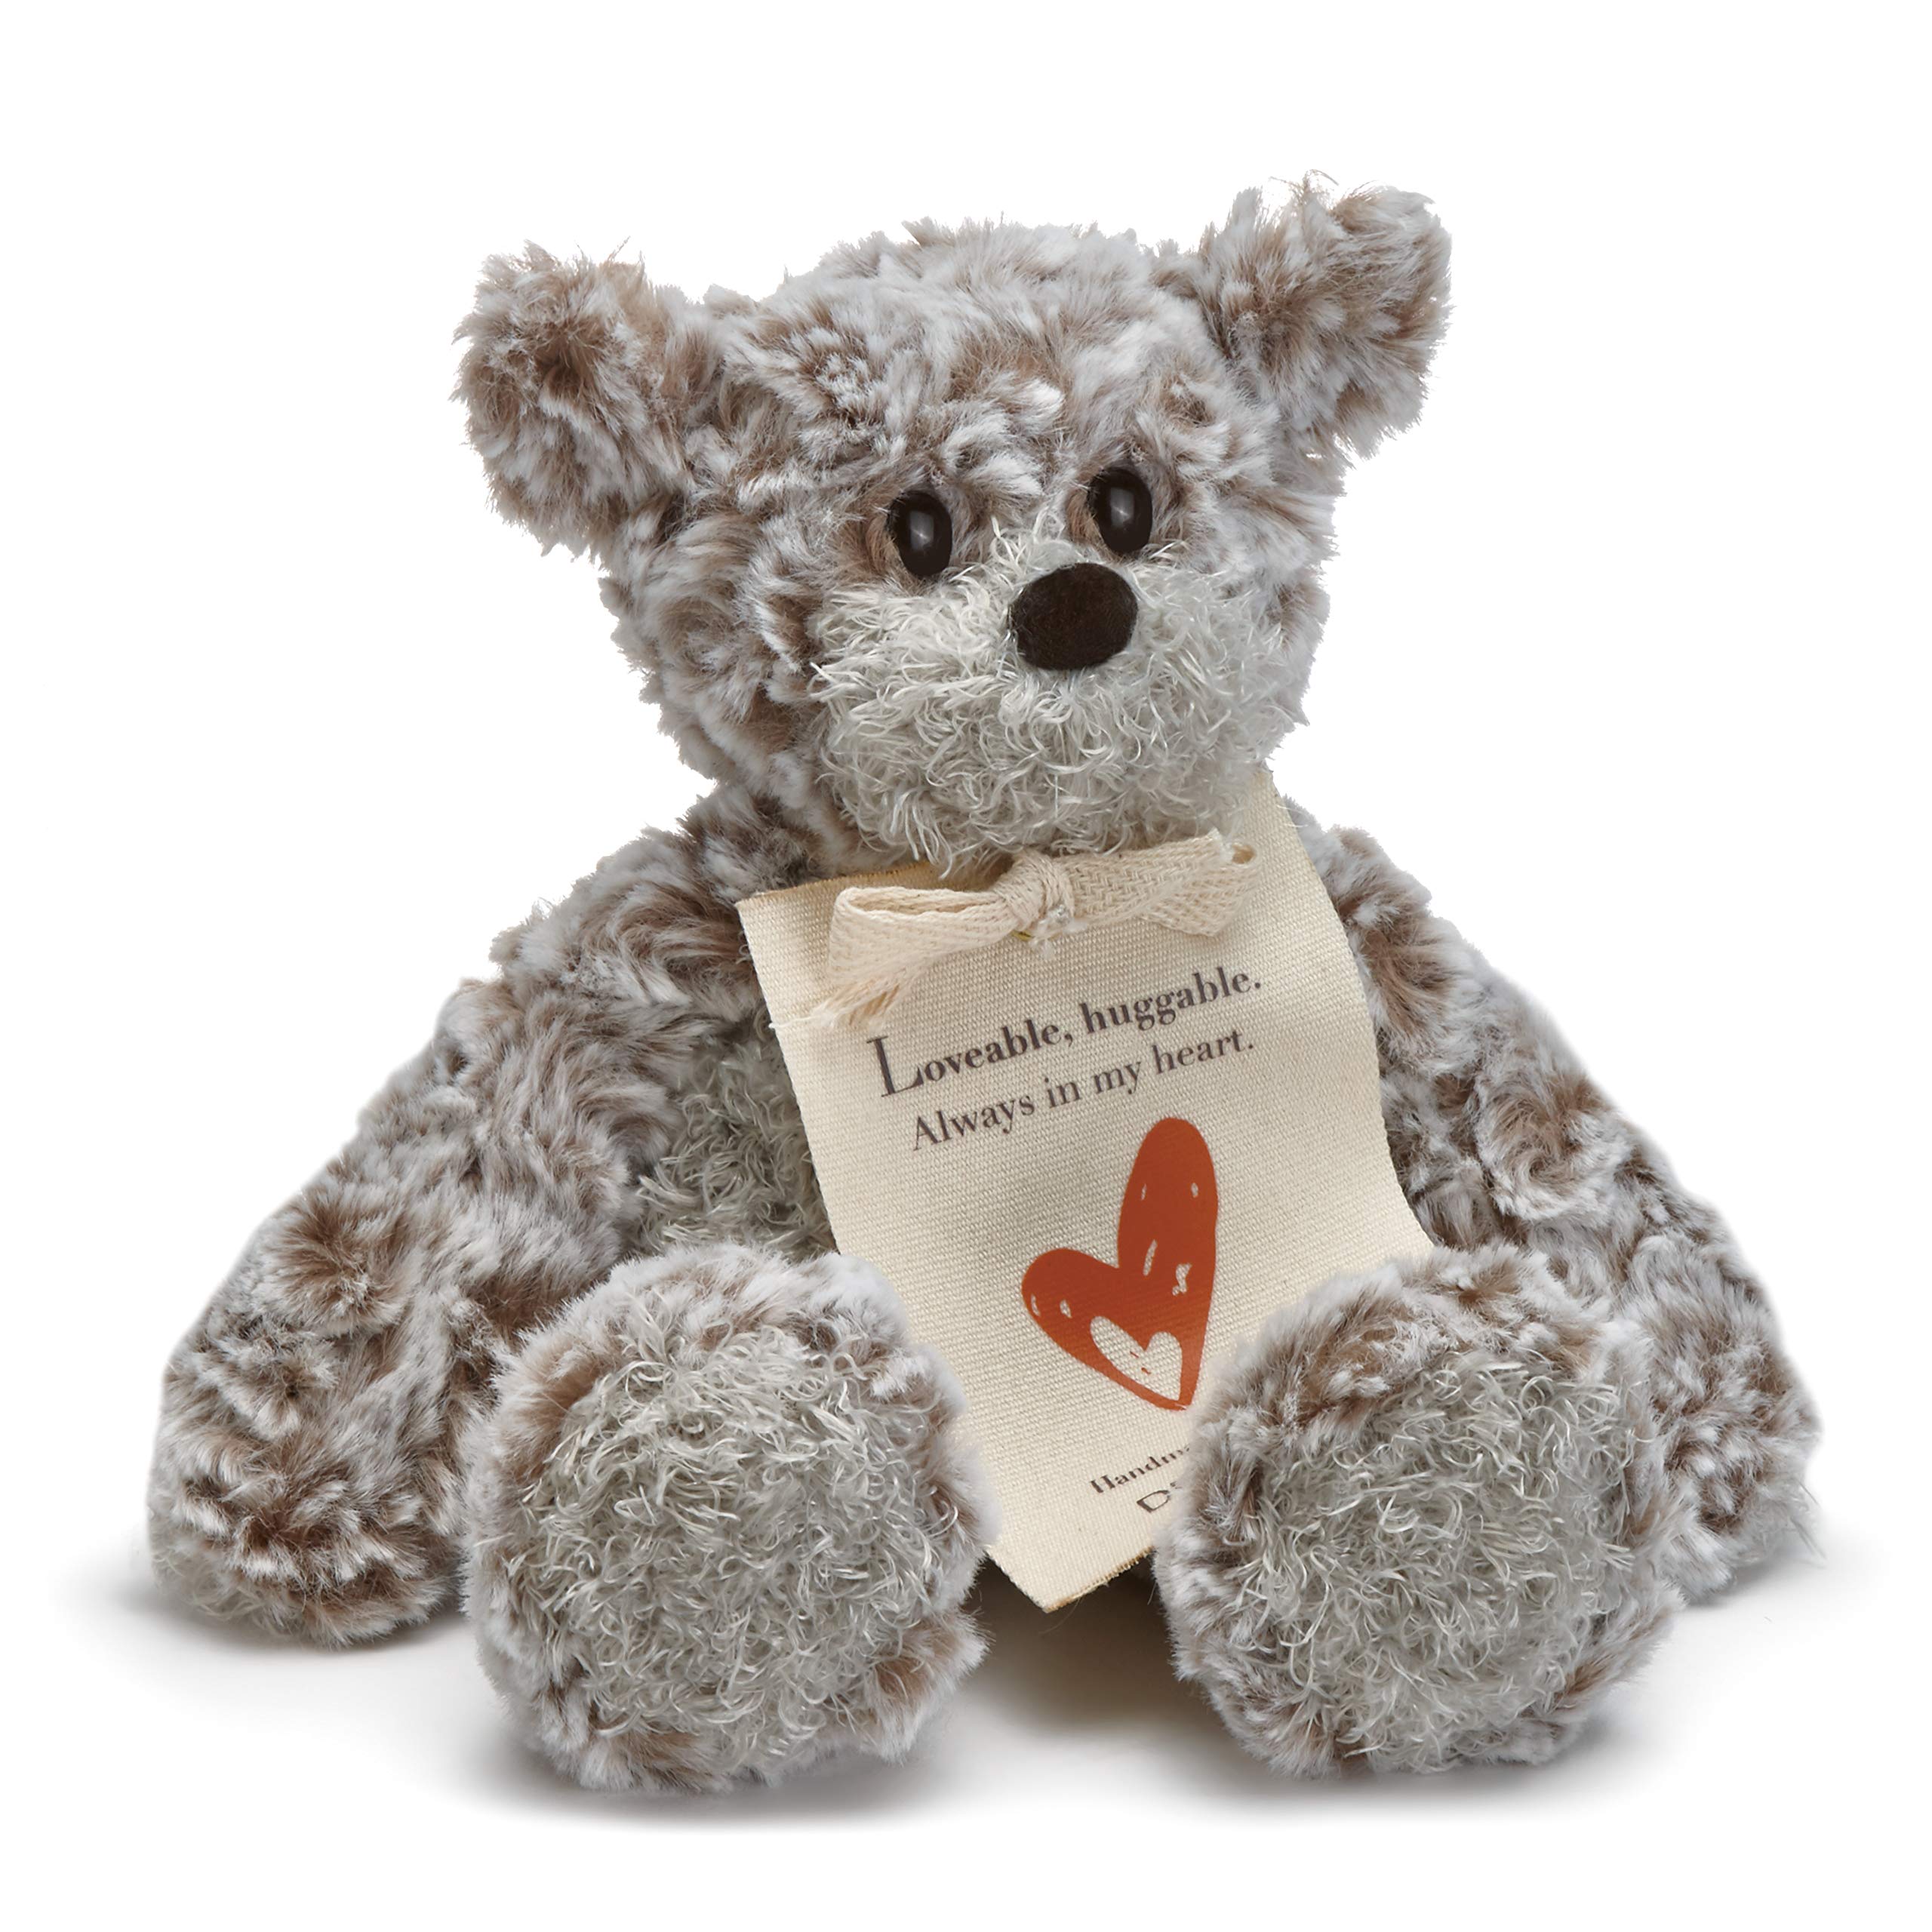 Mini Giving Bear Stuffed Animal - Love